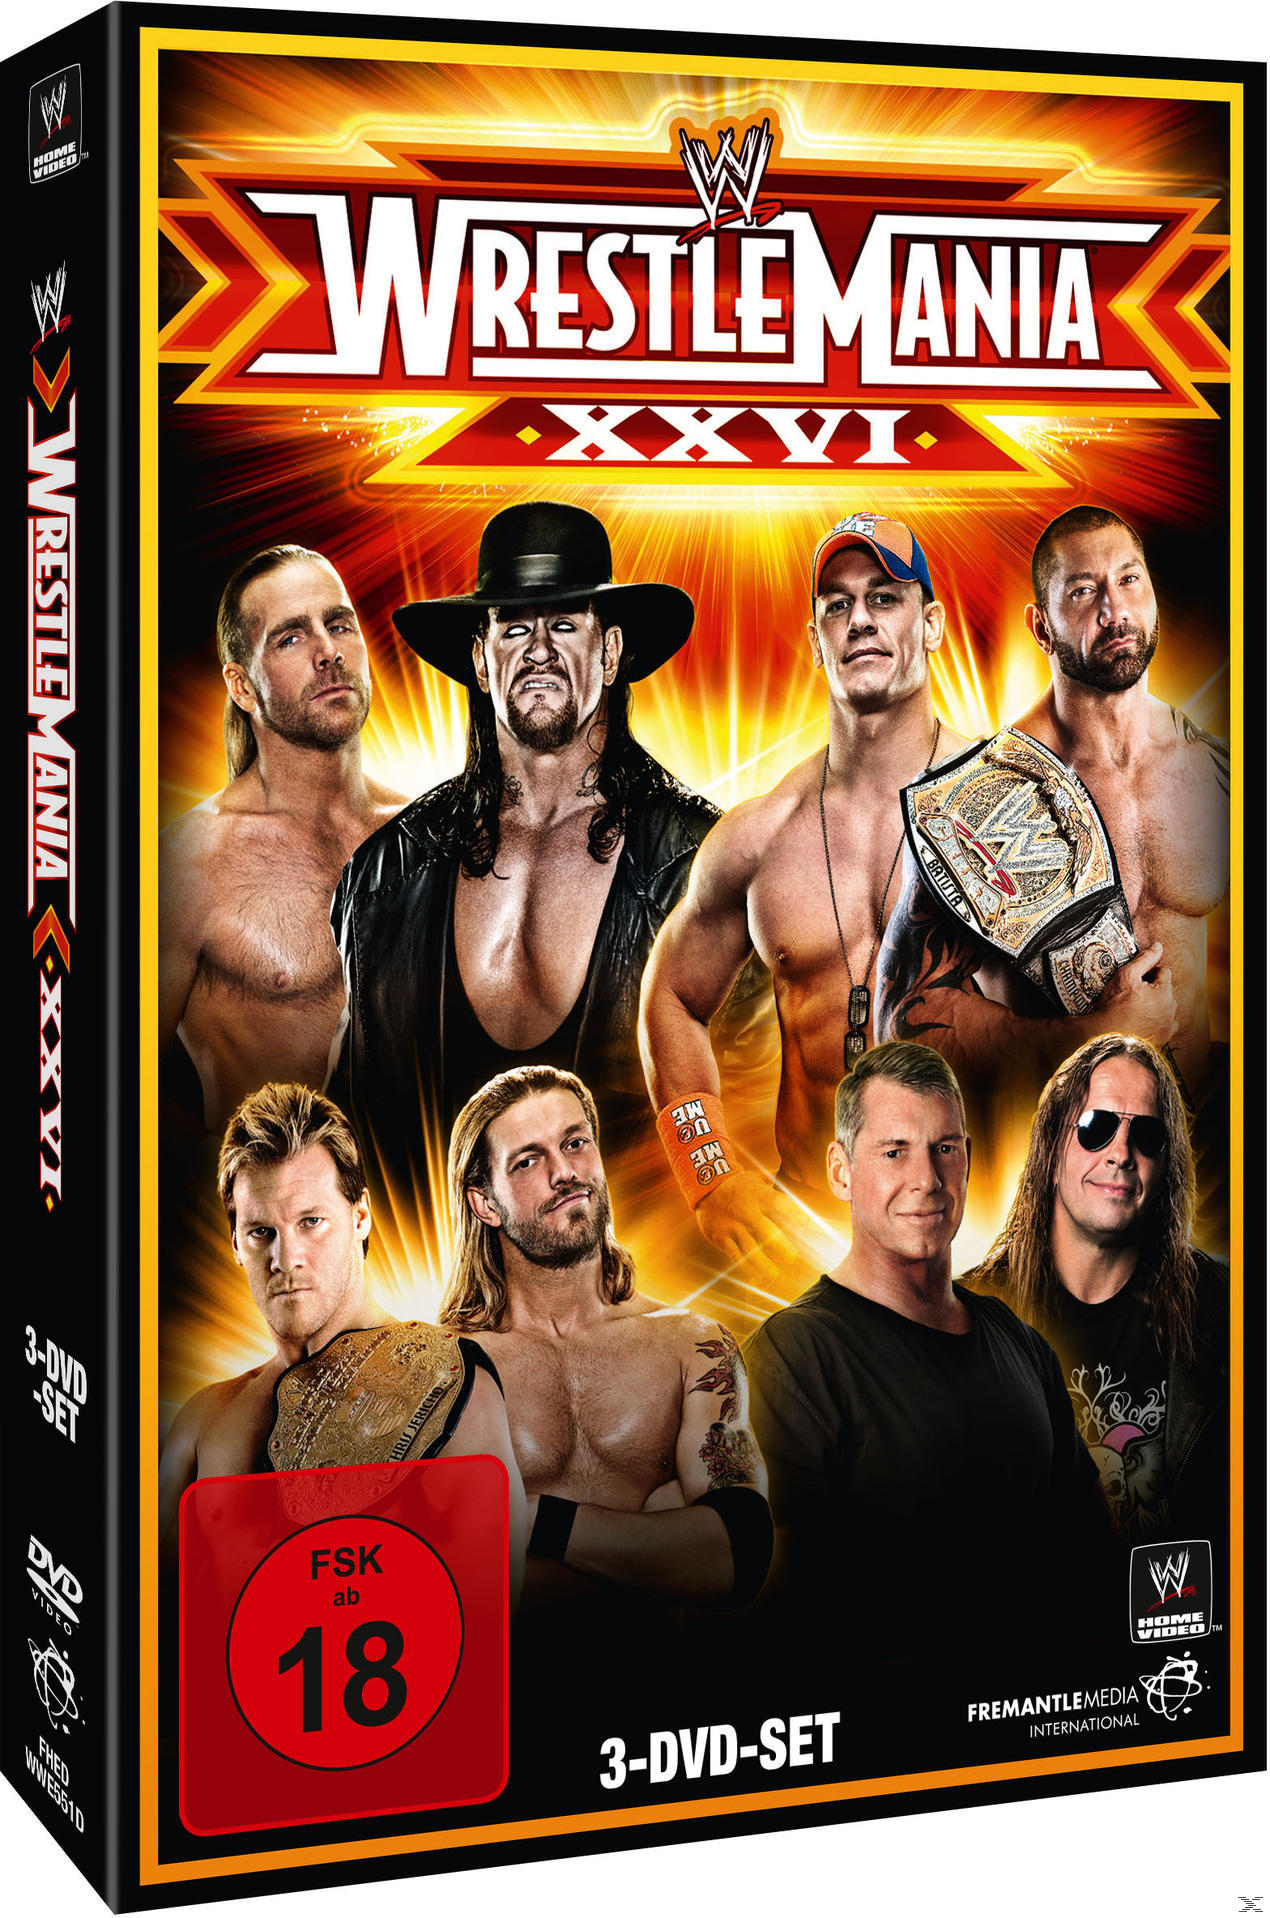 Wrestlemania 26 DVD